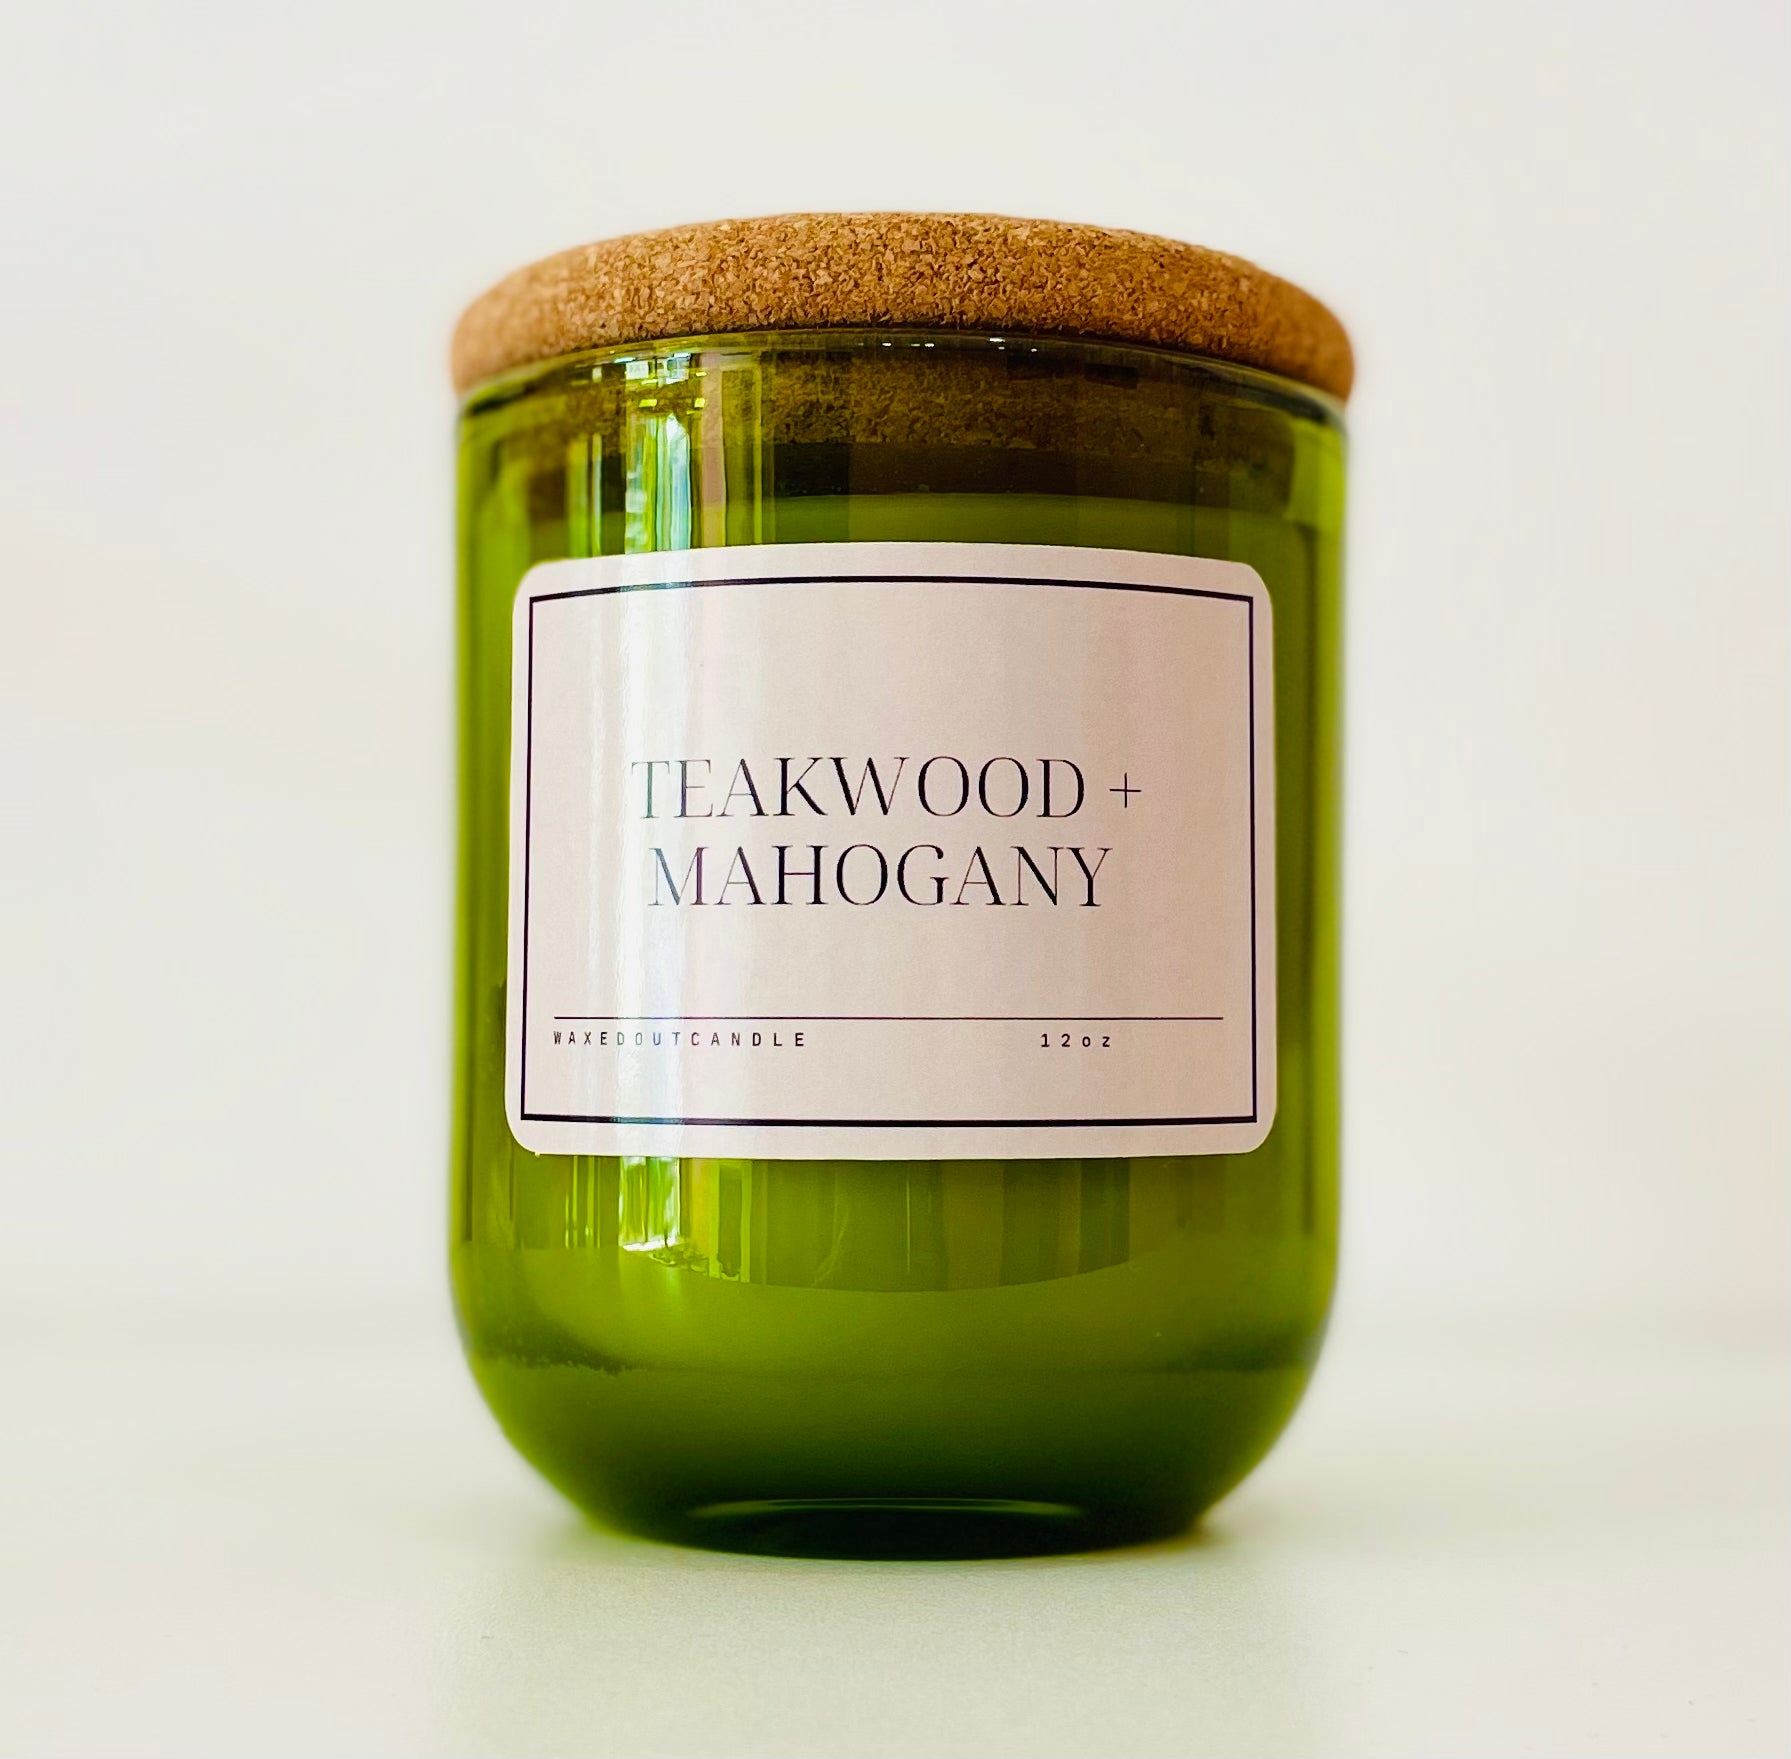 Mahogany Teakwood Wax Melts – BE Salt and Light Candle Co